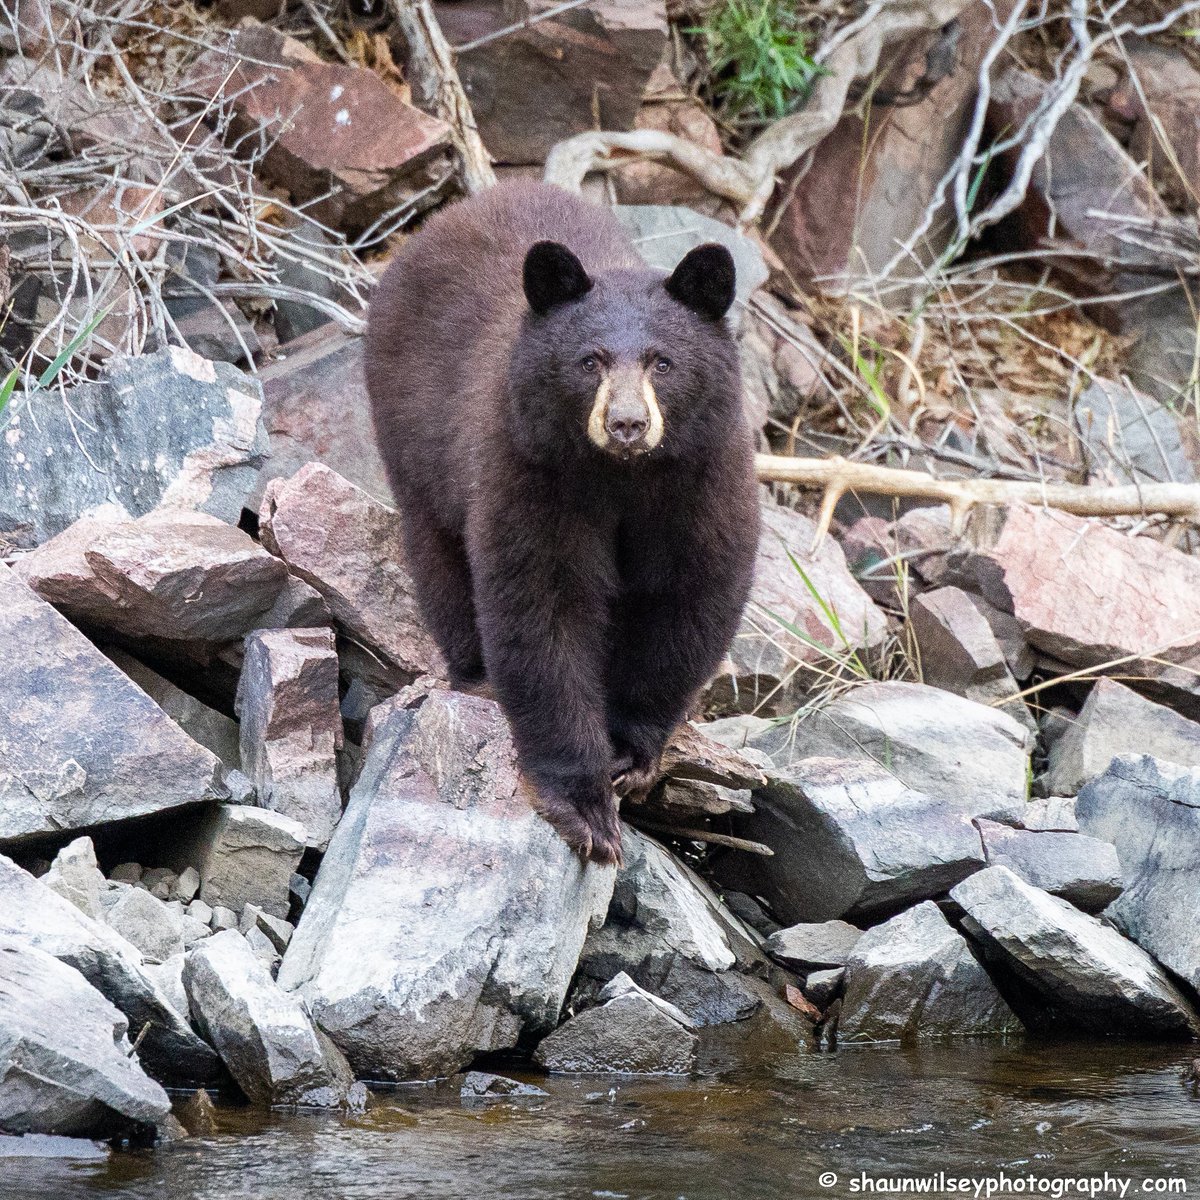 Black Bear after getting a drink. Colorado 8/21/2022. #colorado #coloradophotography #photography #wildlife #wildlifephotography #bear #bears #bearlovers #blackbear #blackbears #curious